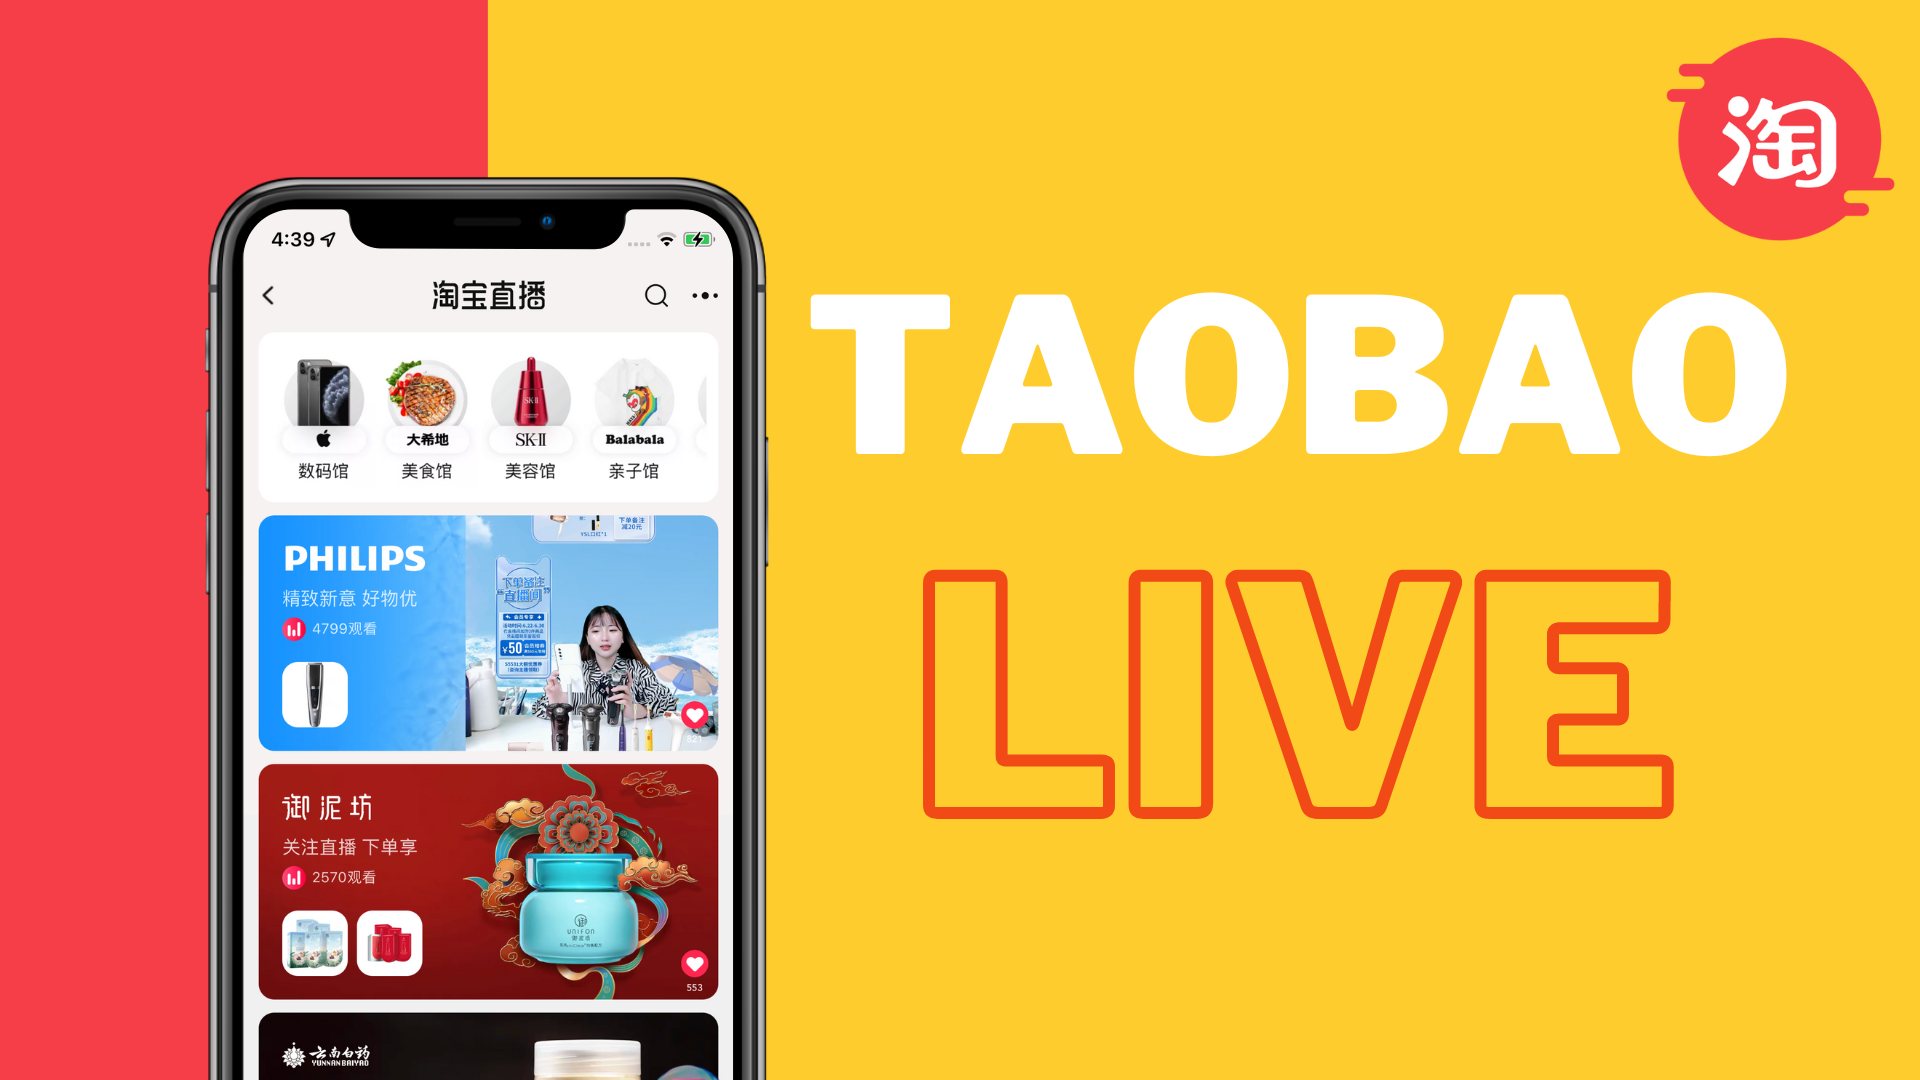 Taobao Live - Live Streaming Driving Massive Profits